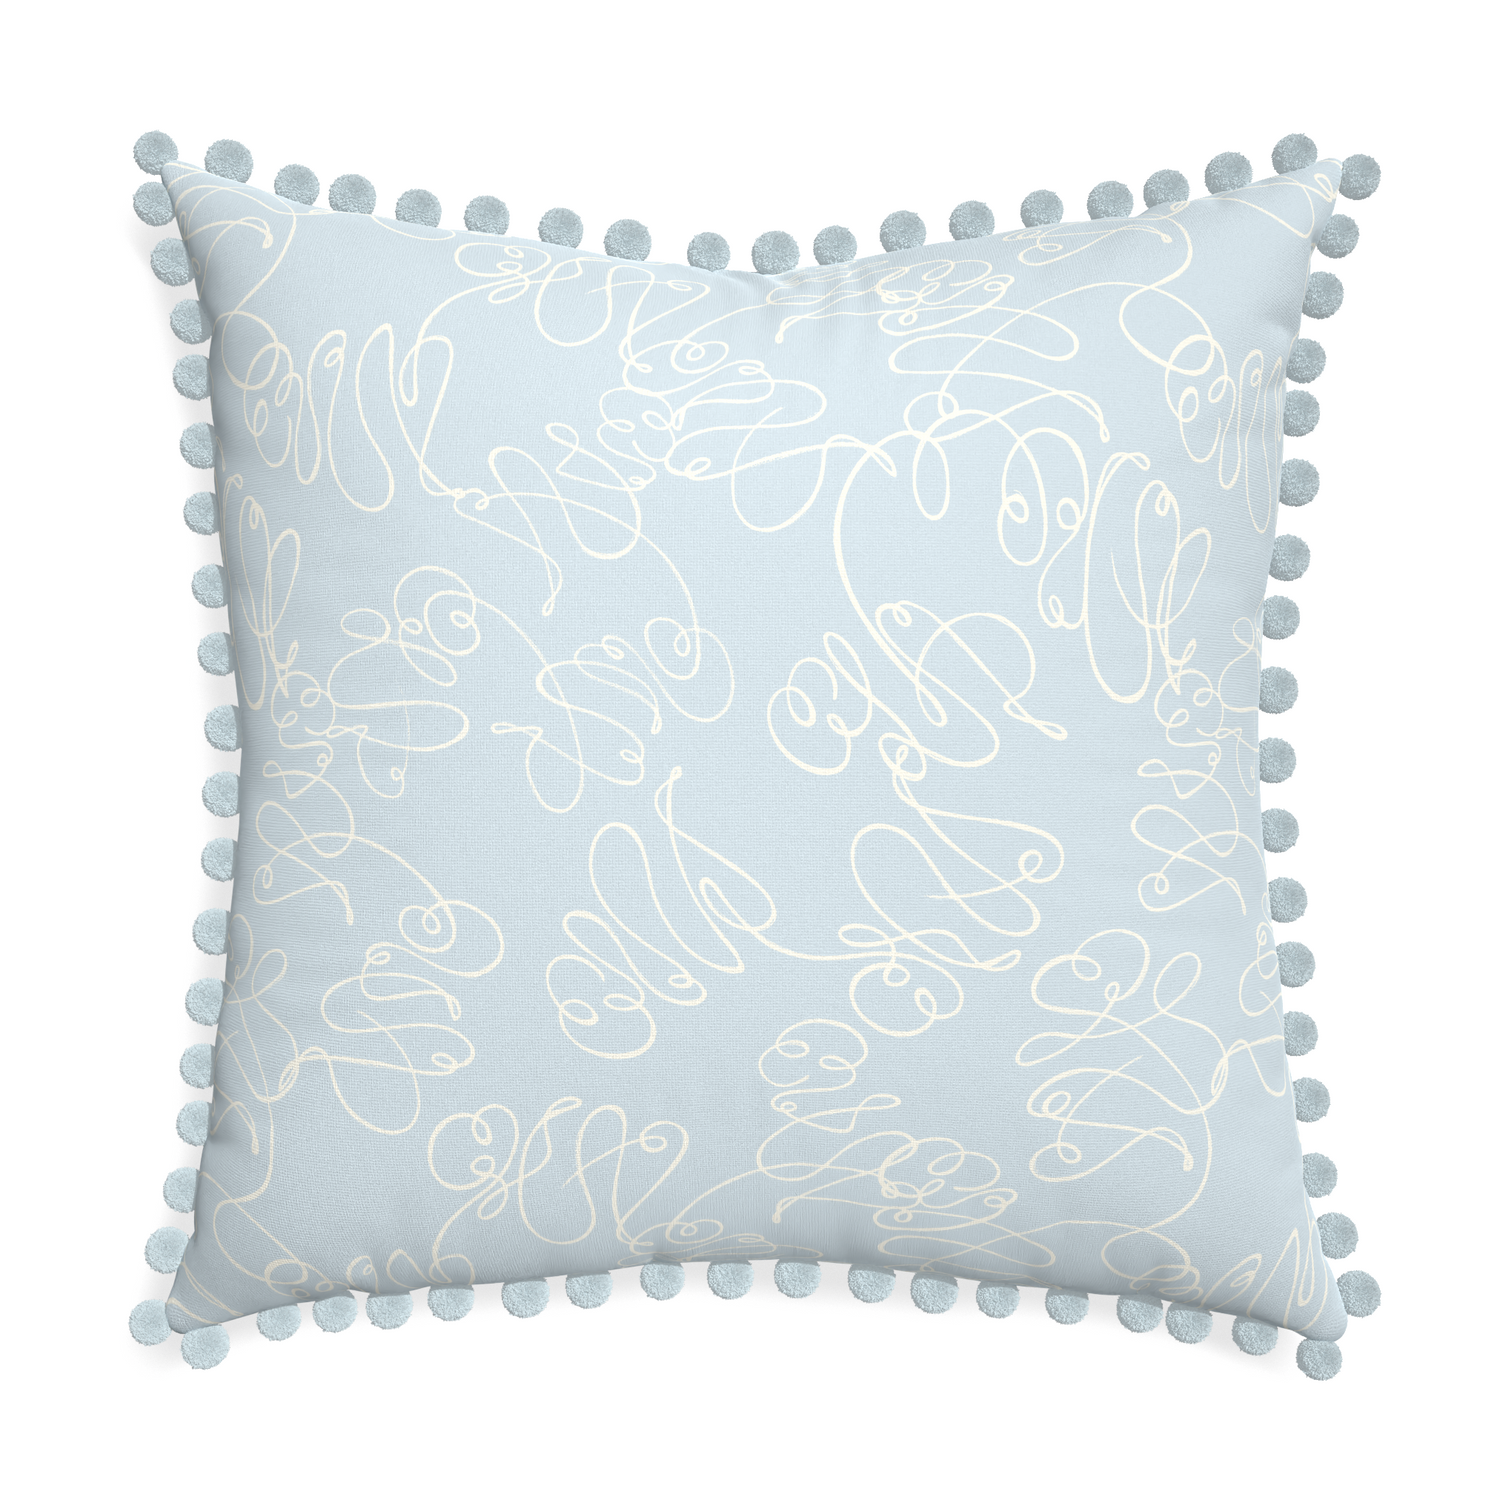 Euro-sham mirabella custom pillow with powder pom pom on white background